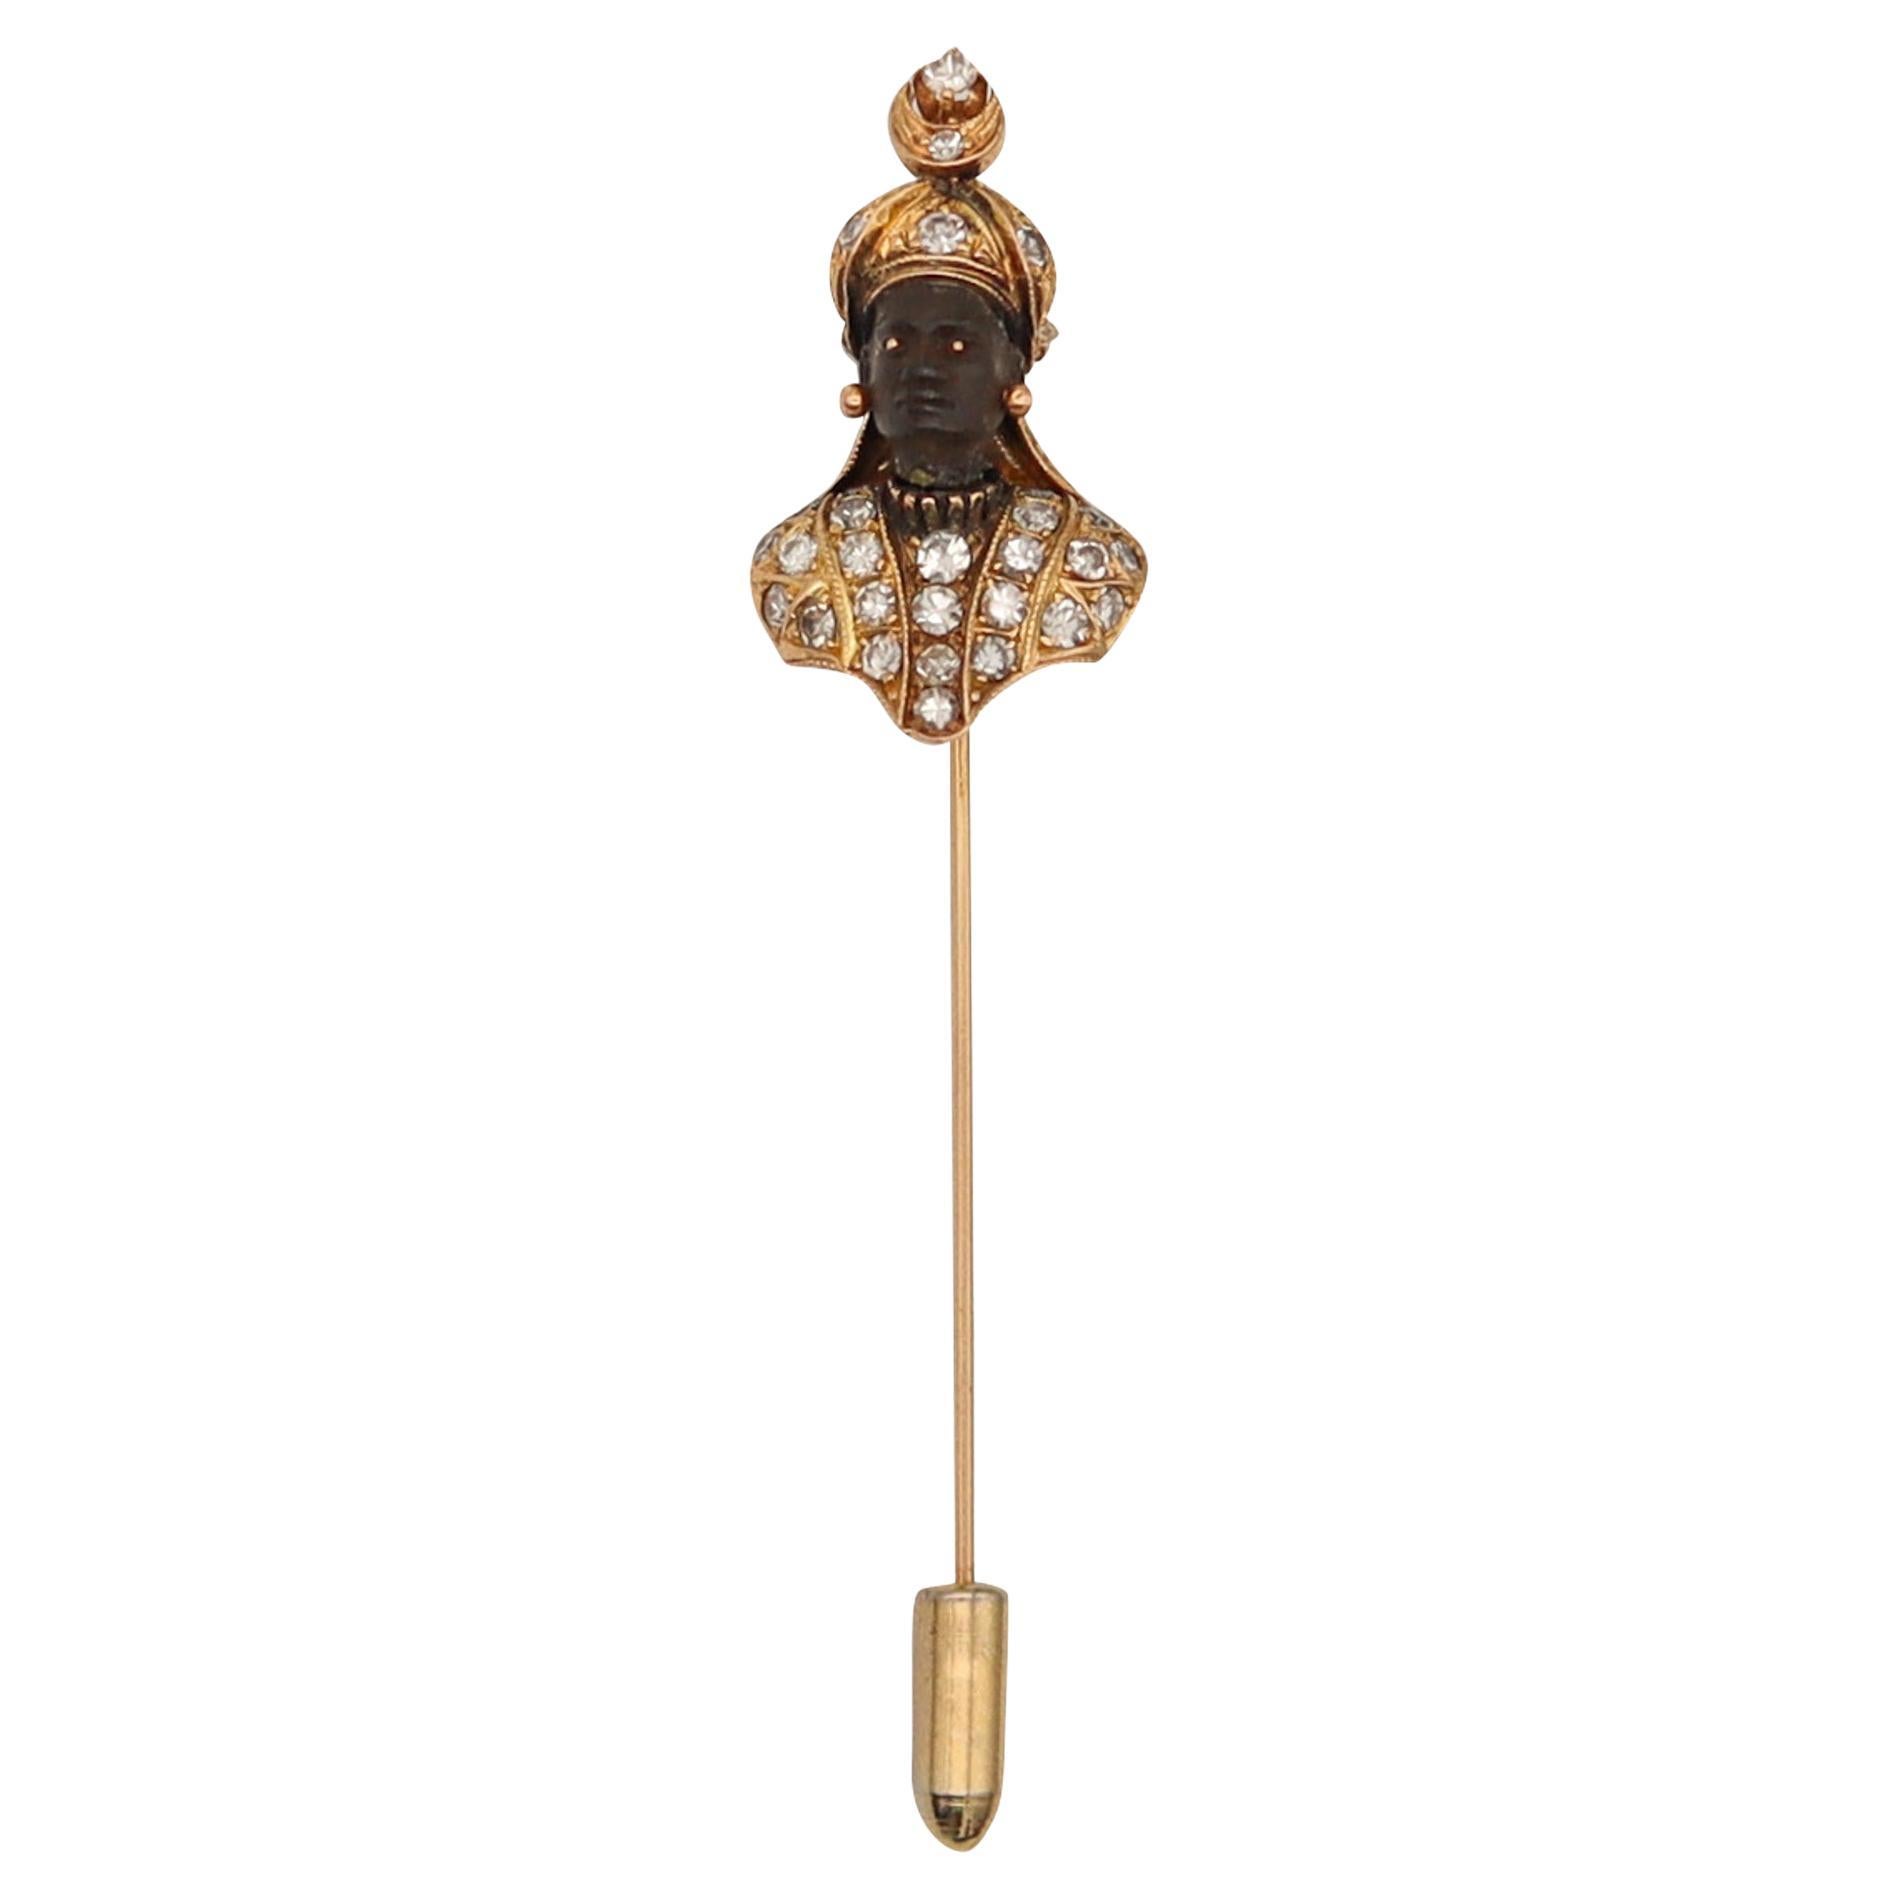 Nubian Moorish Stick Pin - Nubian Prince Stick Pin 18kt 2.28 CTW Diamonds Italian Baroque Revival Ruby Yellow Gold